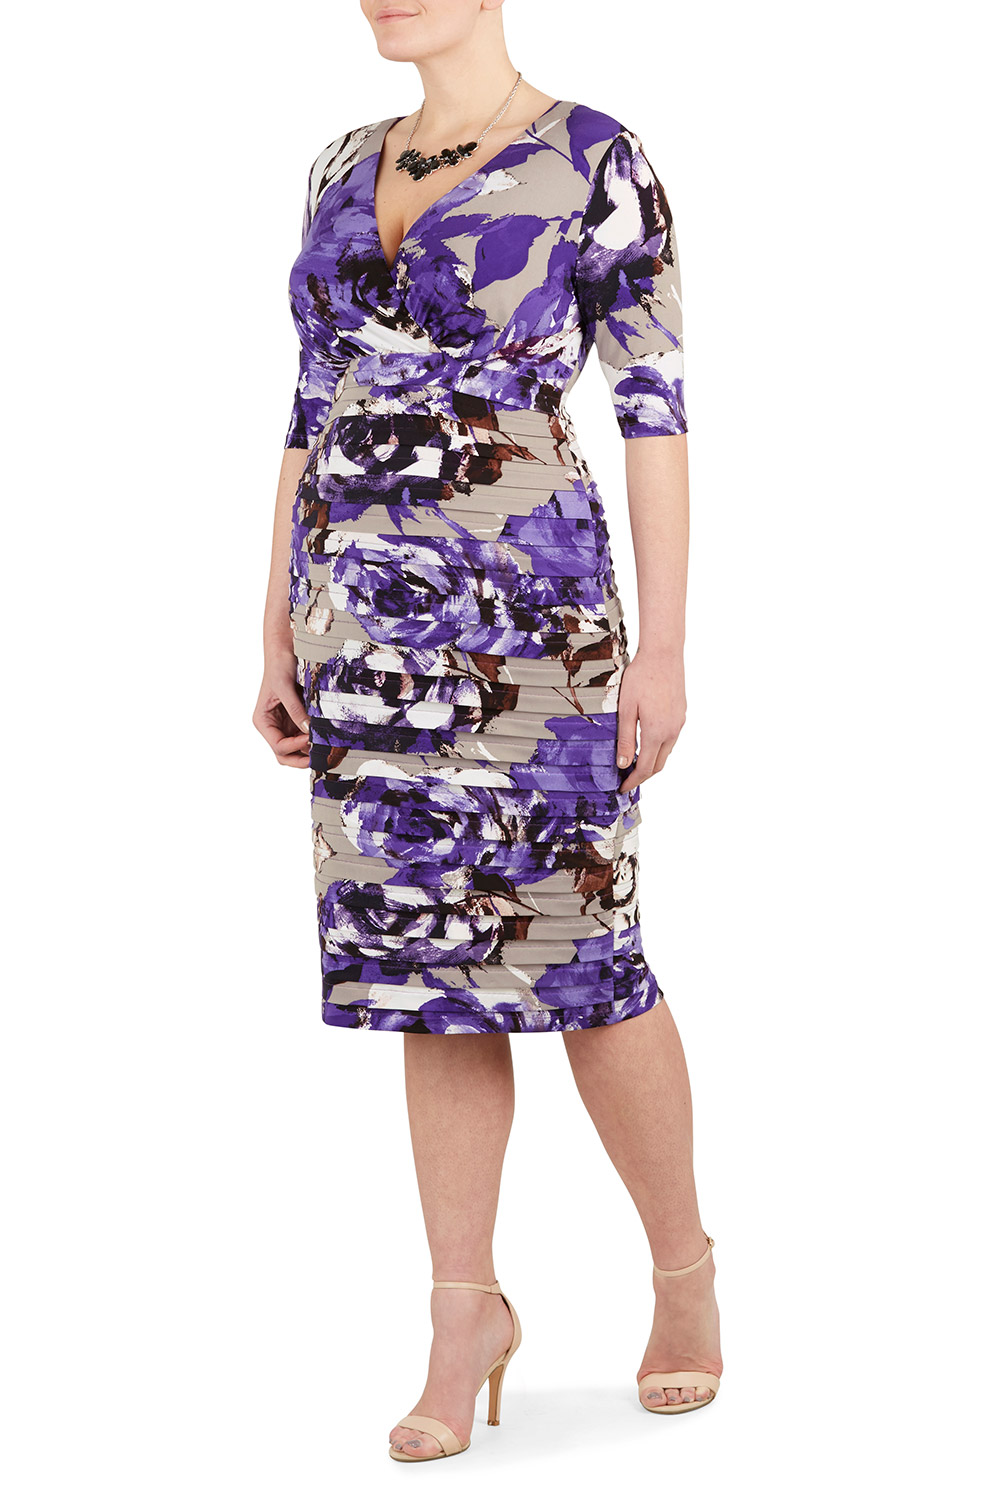 Ann Harvey ann harvey size 18 black 3/4 sleeve floral print blouse 